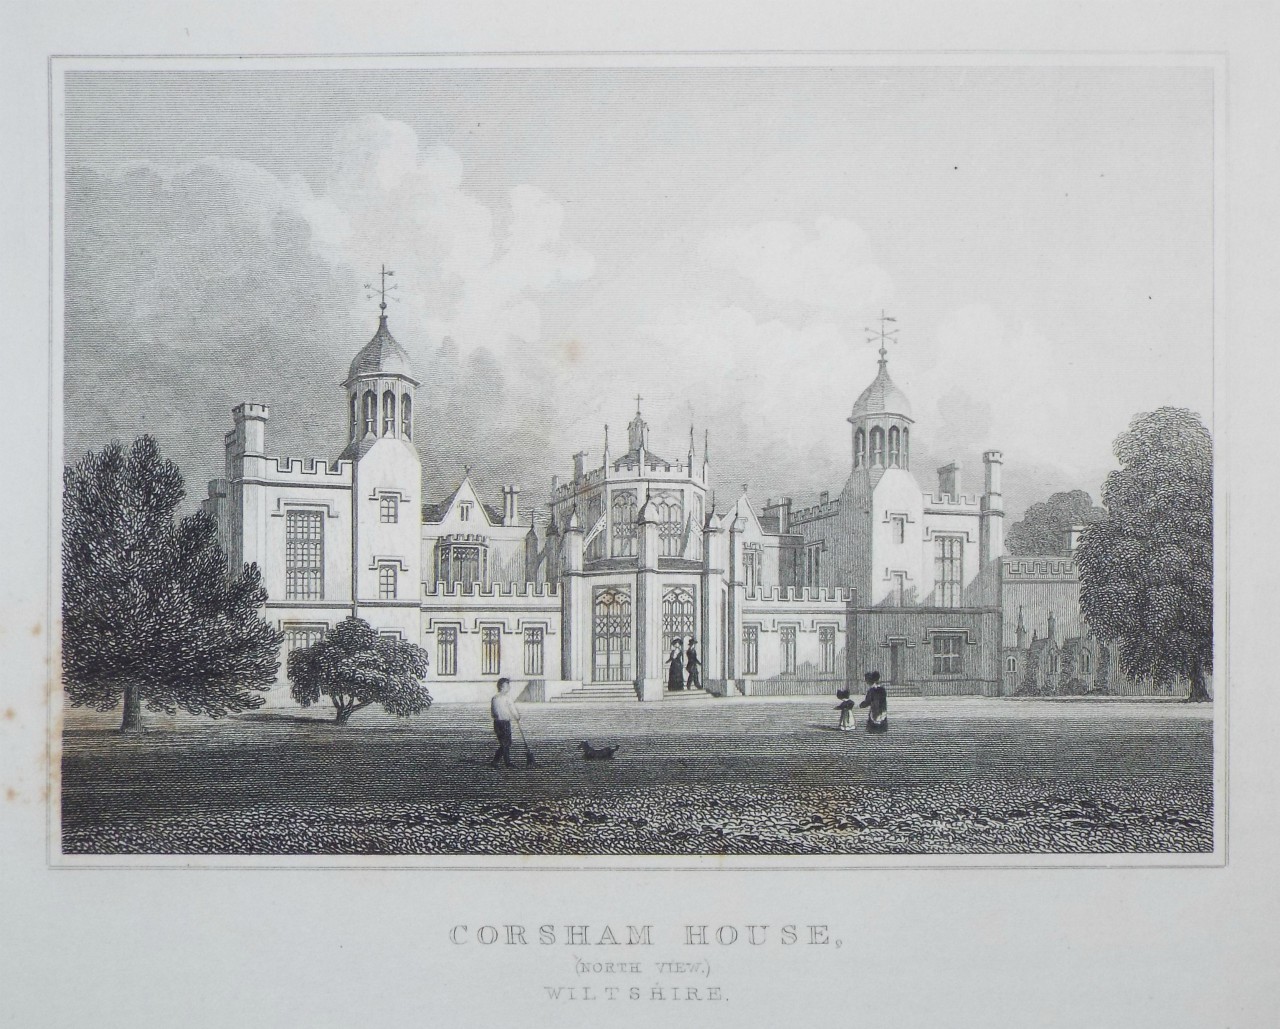 Print - Corsham House, (North View,) Wiltshire. - Cruse